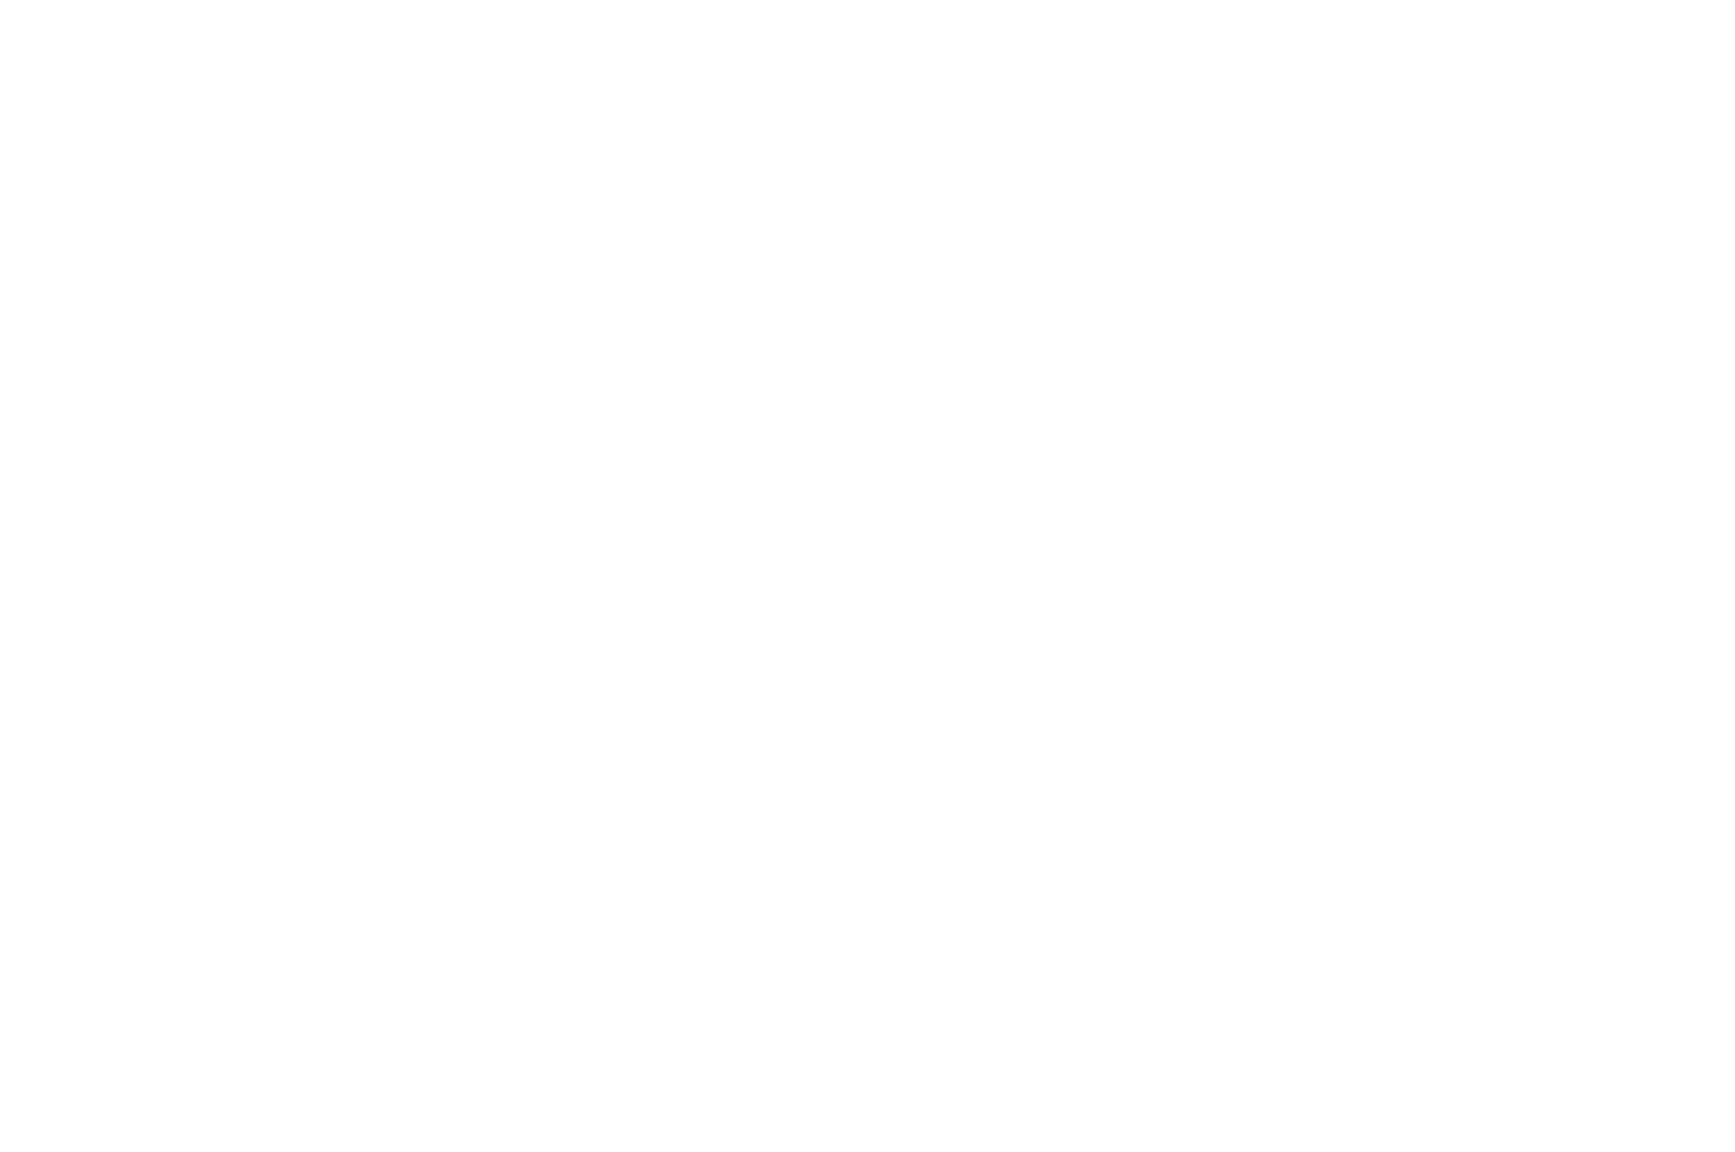 OFFICIAL SELECTION - Golden Nugget International Film Festival - 2021